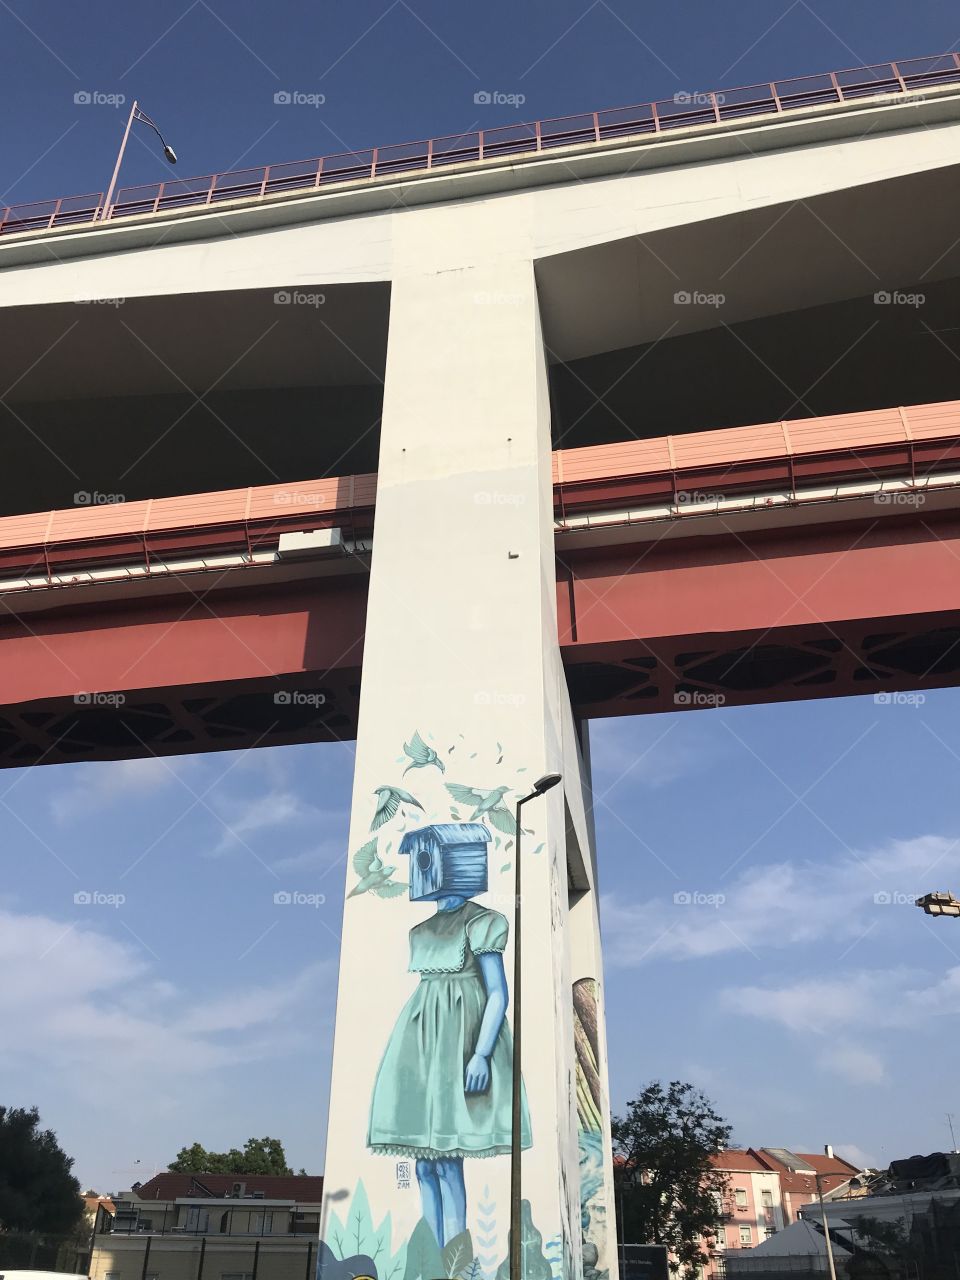 Graffiti in the Bridge